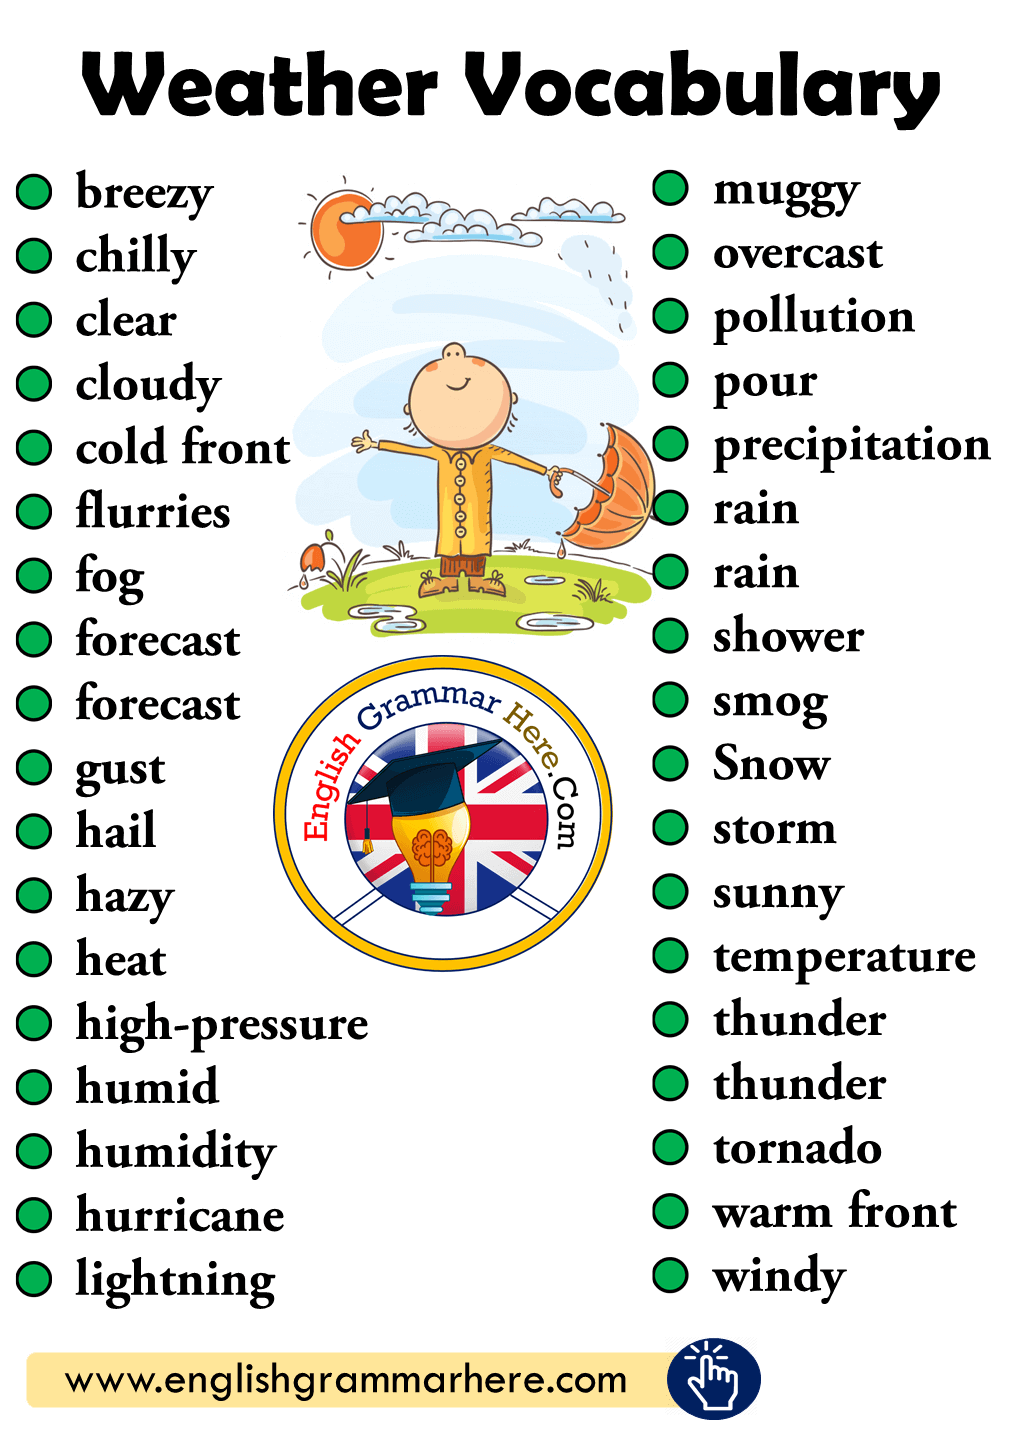 English Weather Vocabulary List